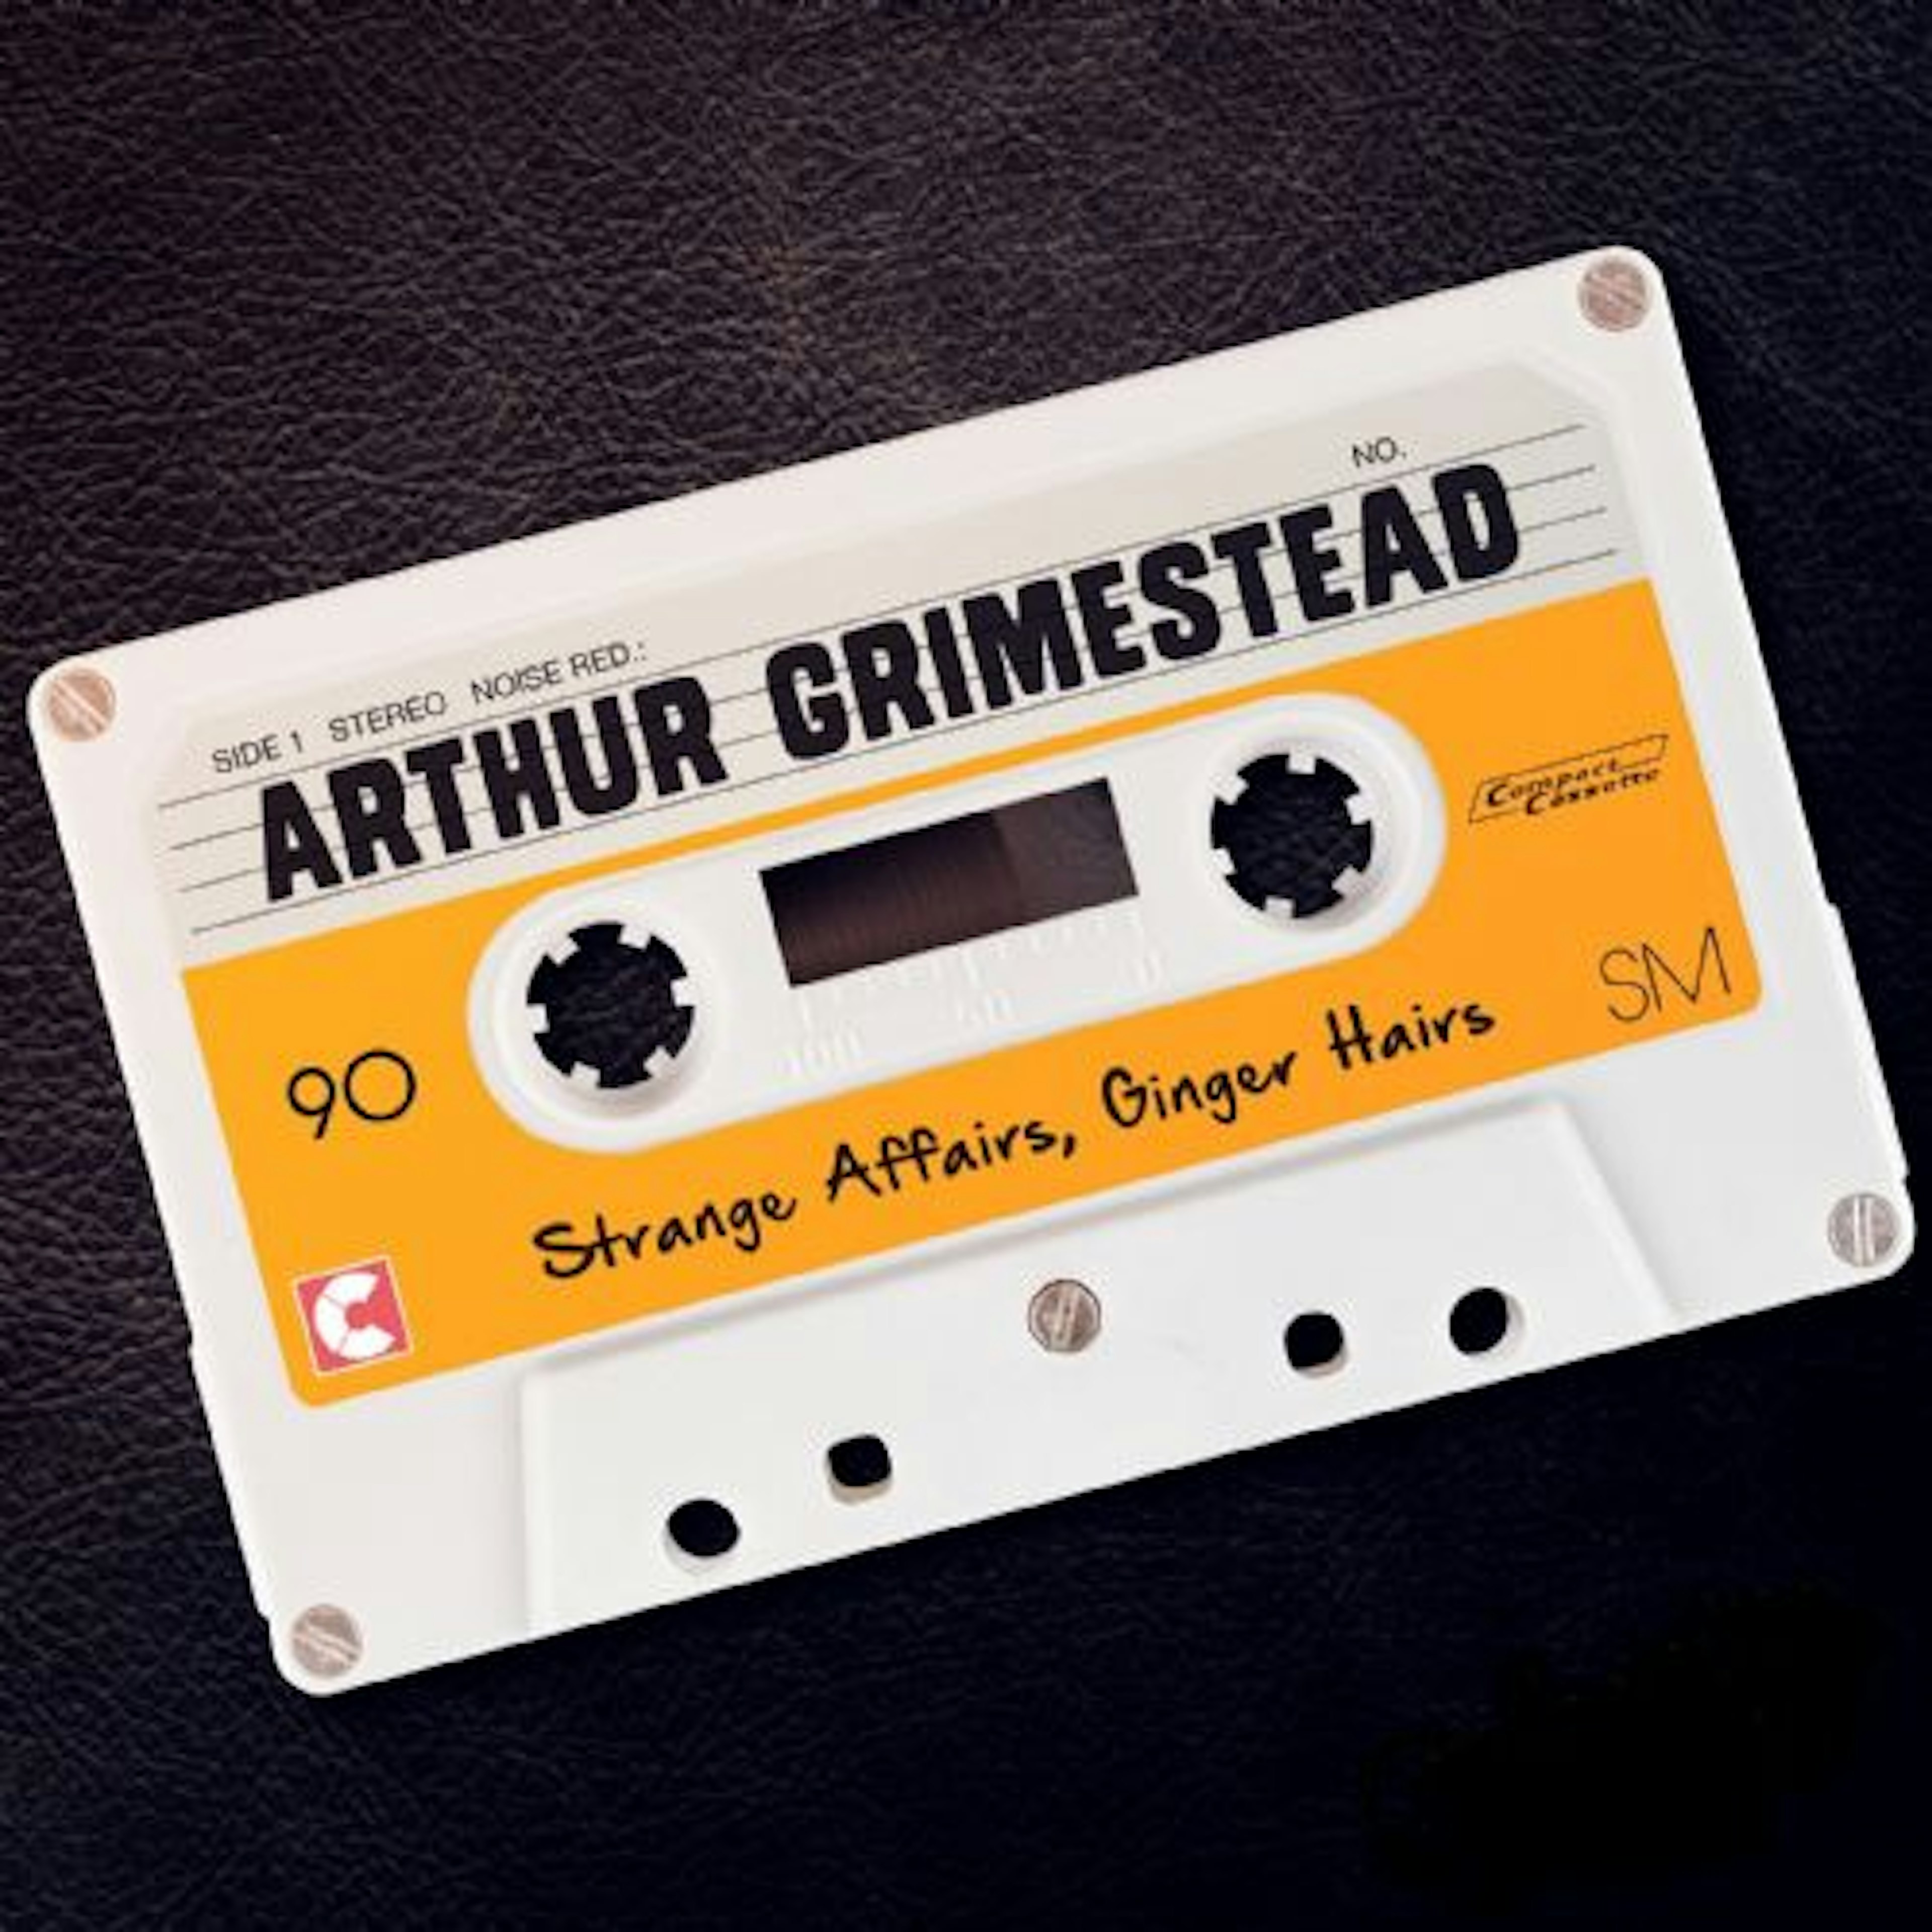 Arthur Grimestead